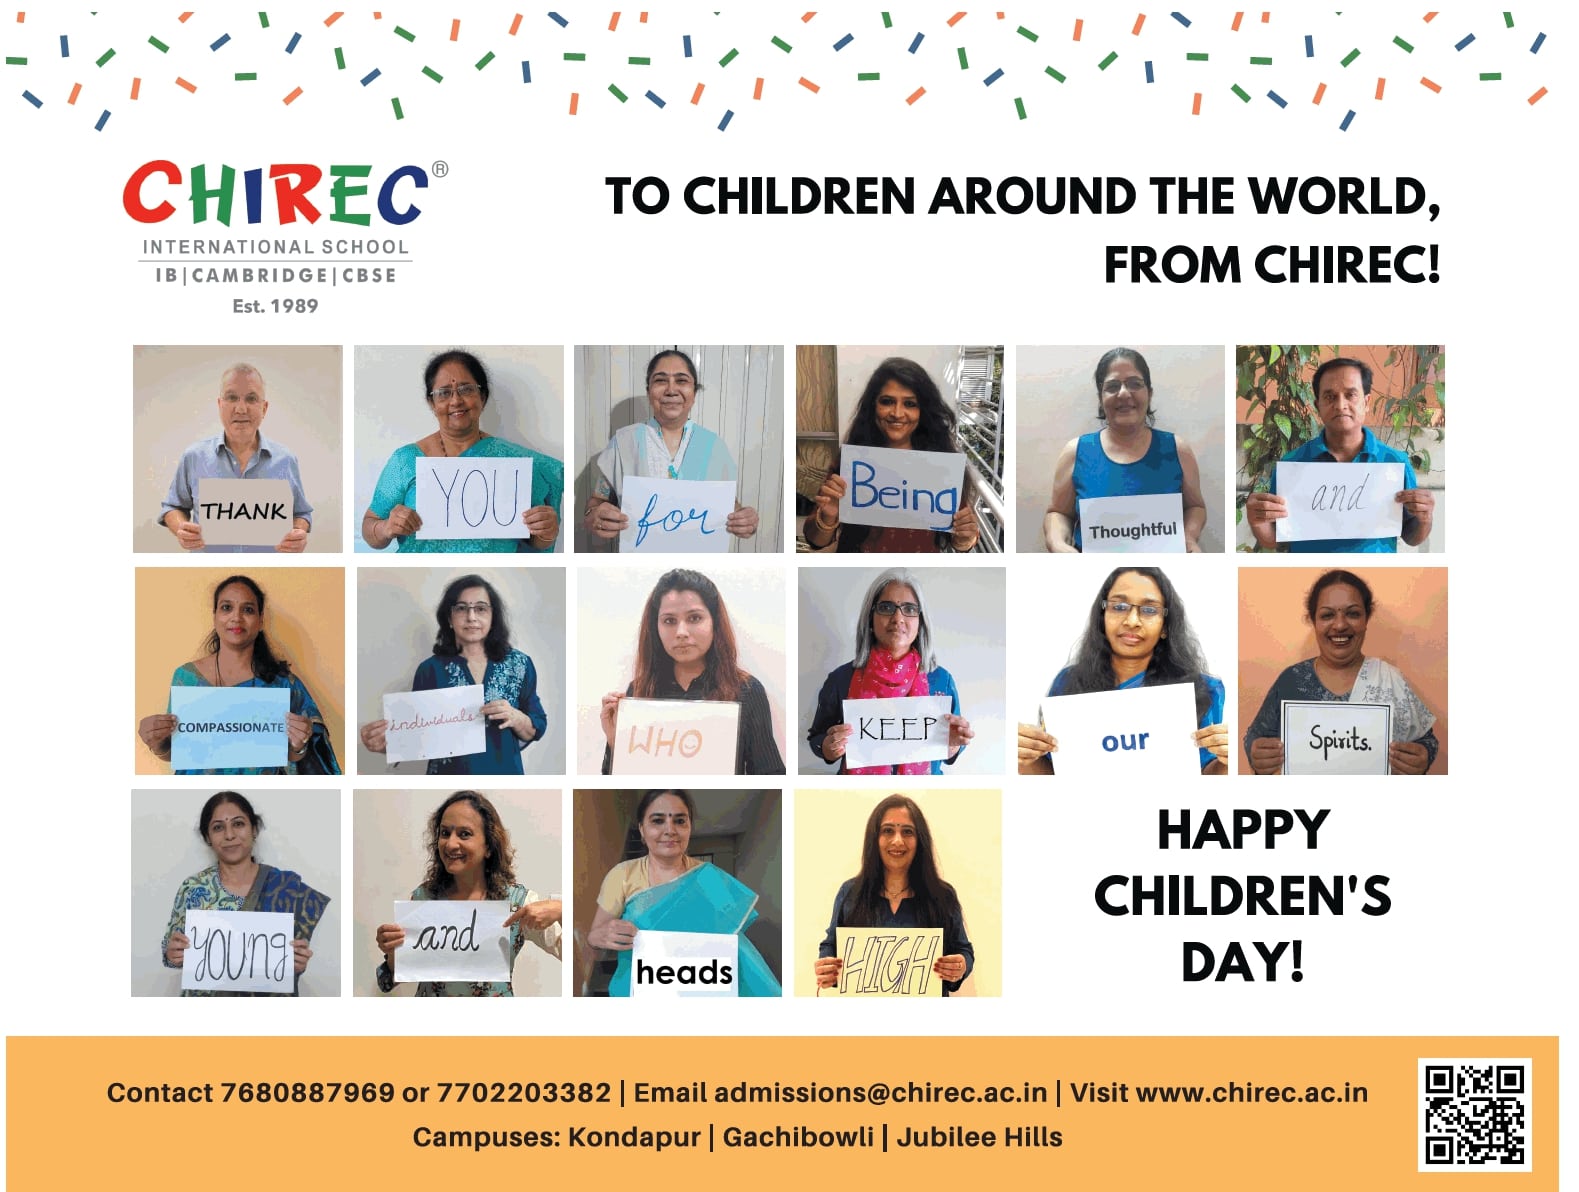 chirec-international-school-happy-childrens-day-to-children-around-the-world-from-chirec-ad-toi-hyderabad-13-11-2020